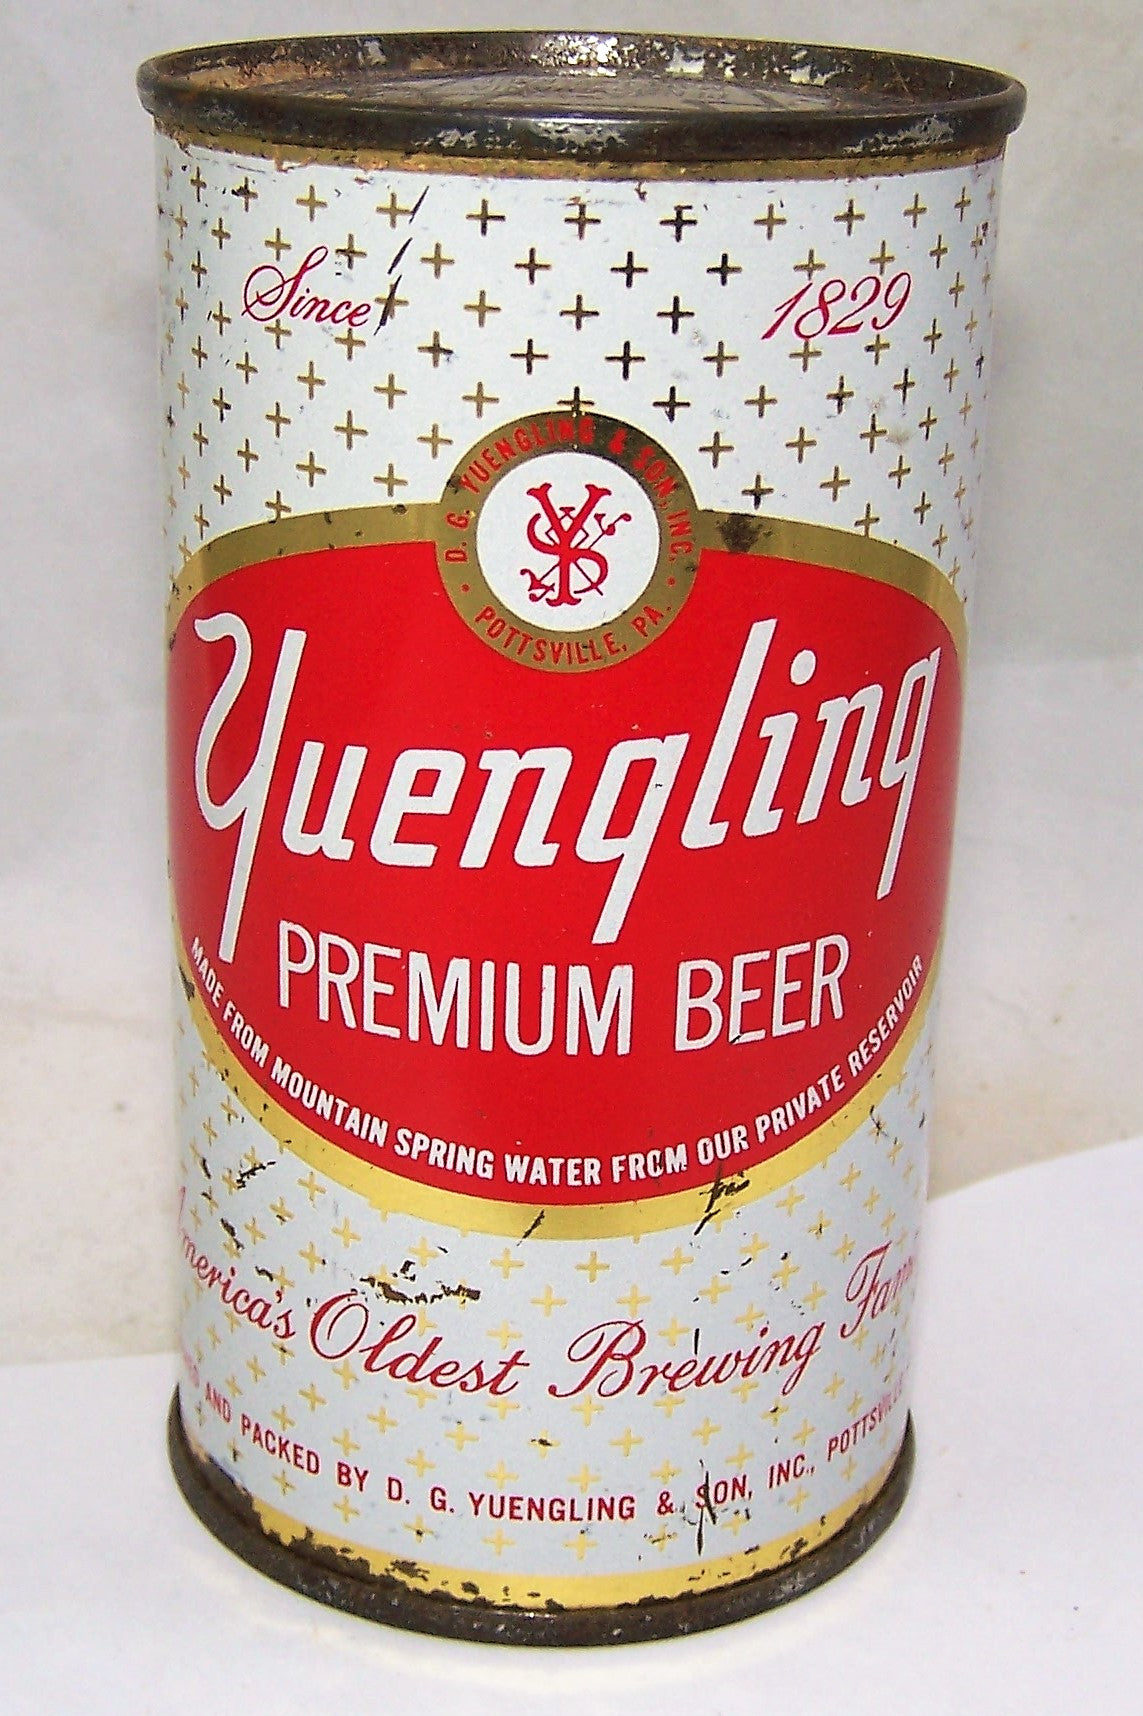 Yuengling Premium Beer, USBC 147-07, Grade 1- Sold on 11/12/19